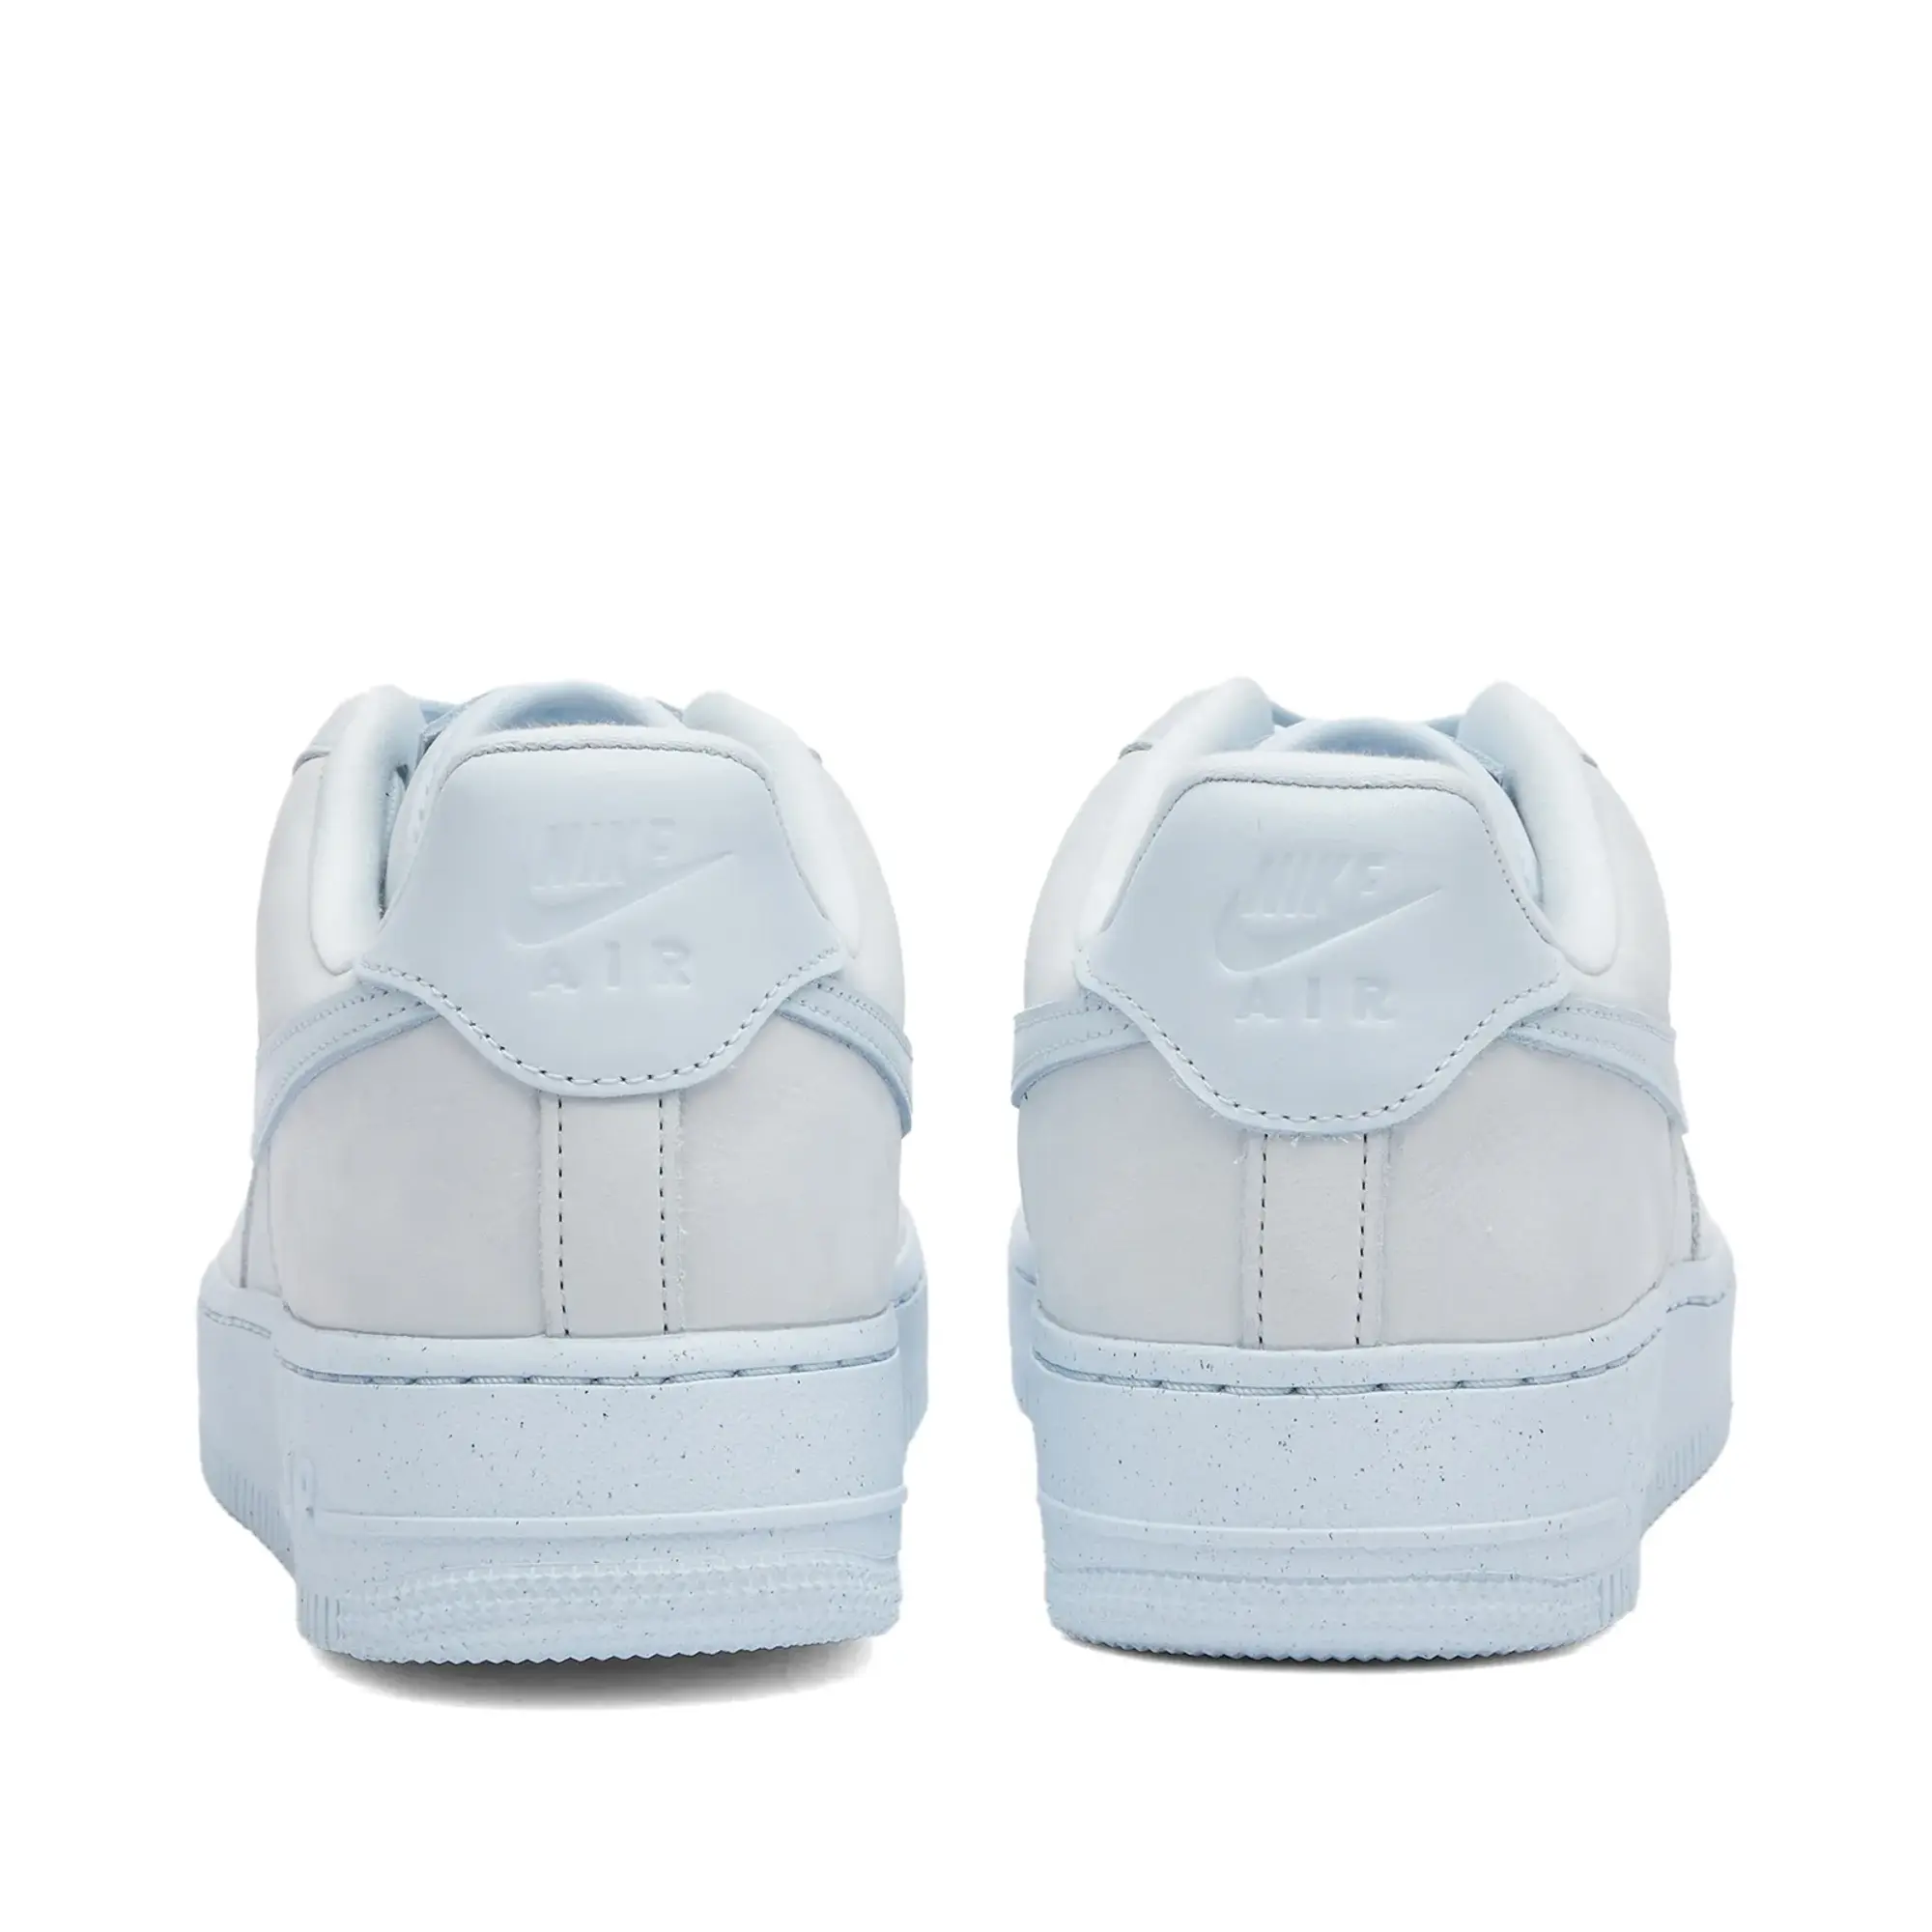 Nike Women's Air Force 1 '07 Premium Blue Tint Sneakers